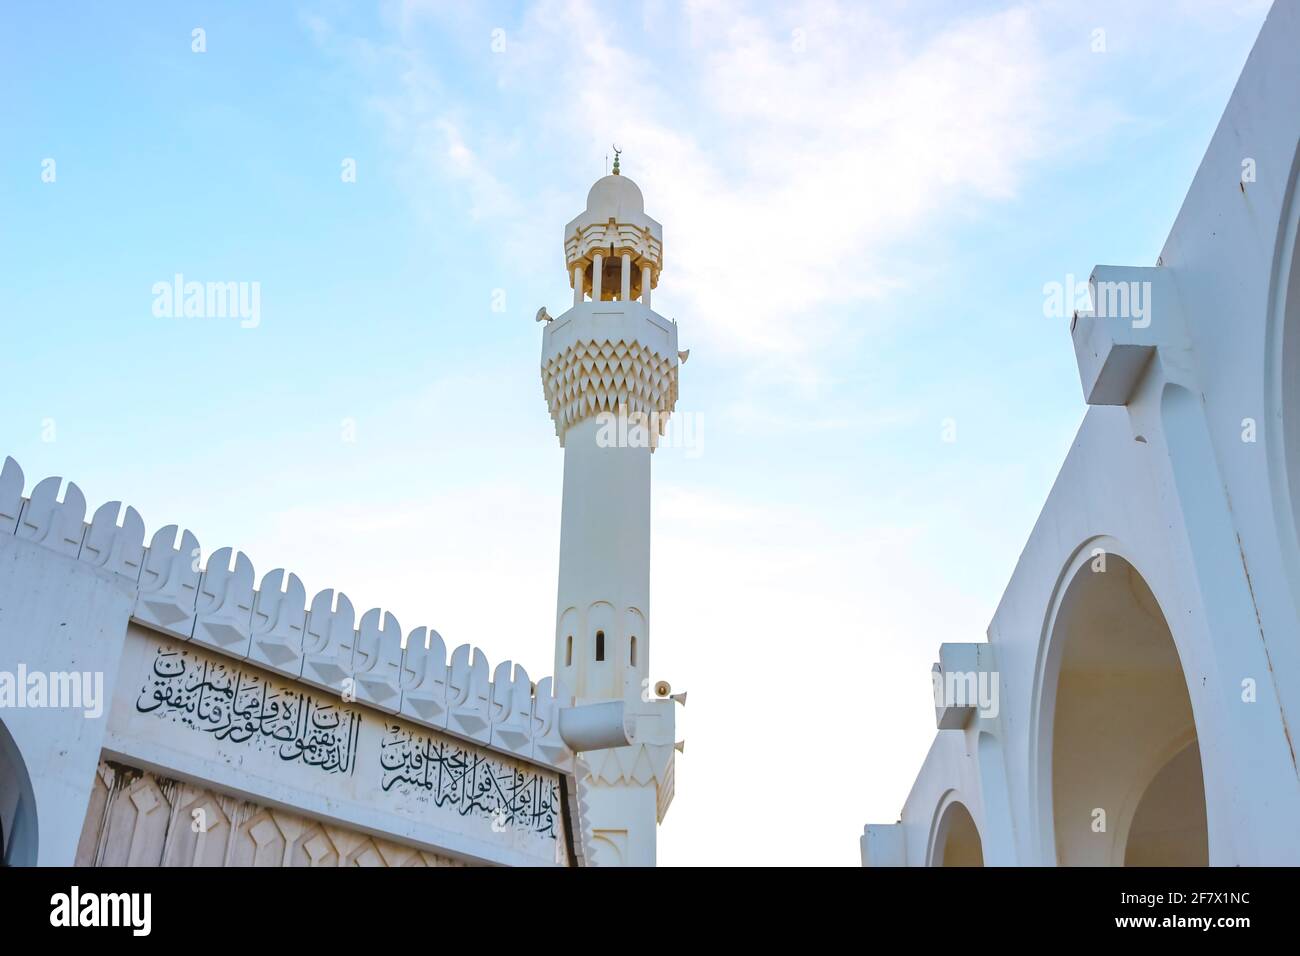 Al Rahma Mosque: The Floating Mosque In Jeddah, Saudi Arabia Stock Photo